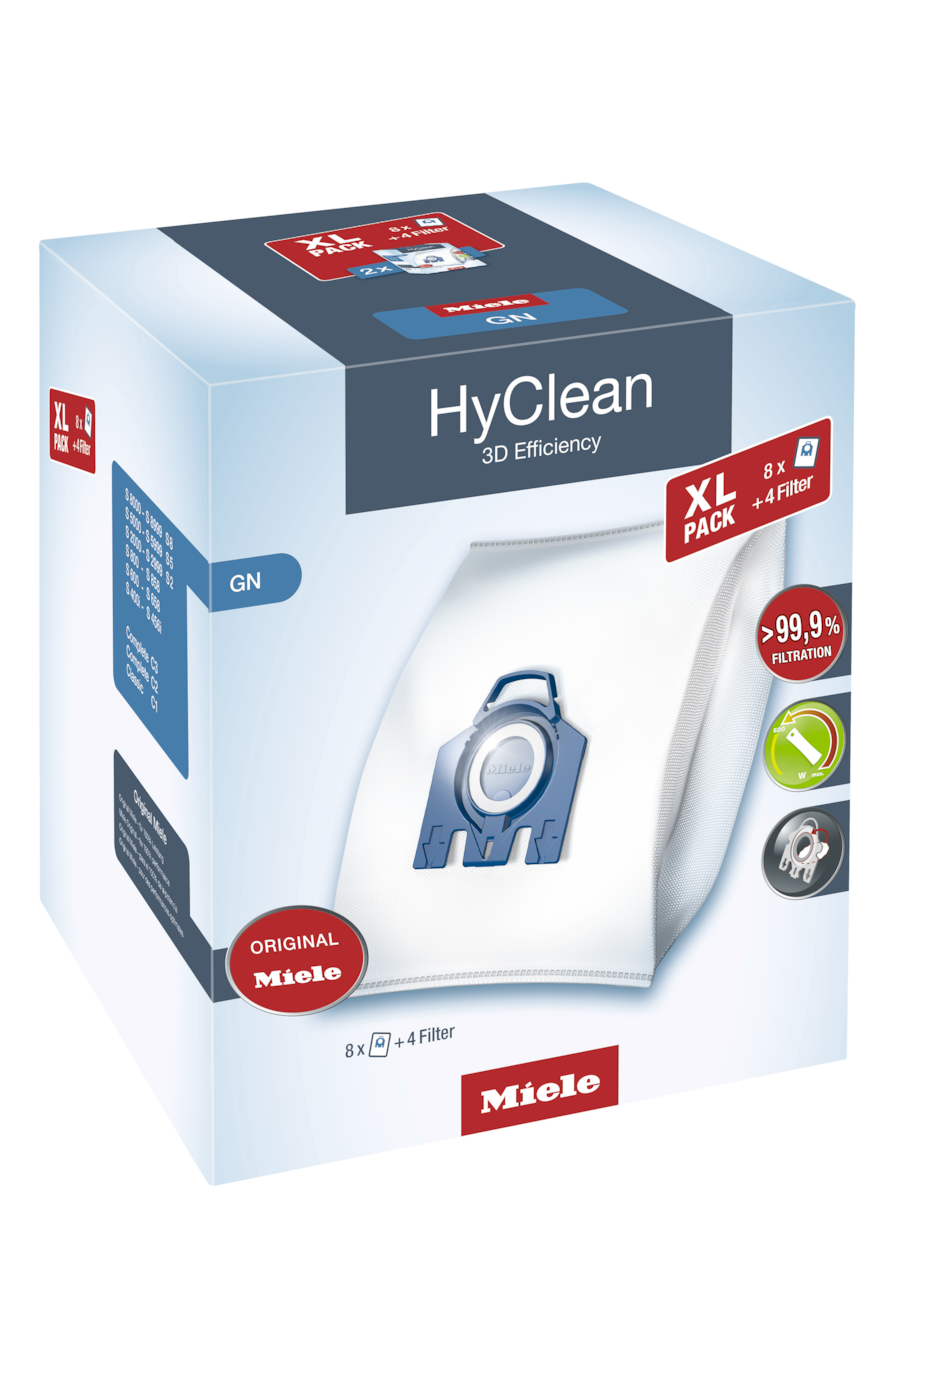 XL-Pack HyClean 3D Efficiency GN